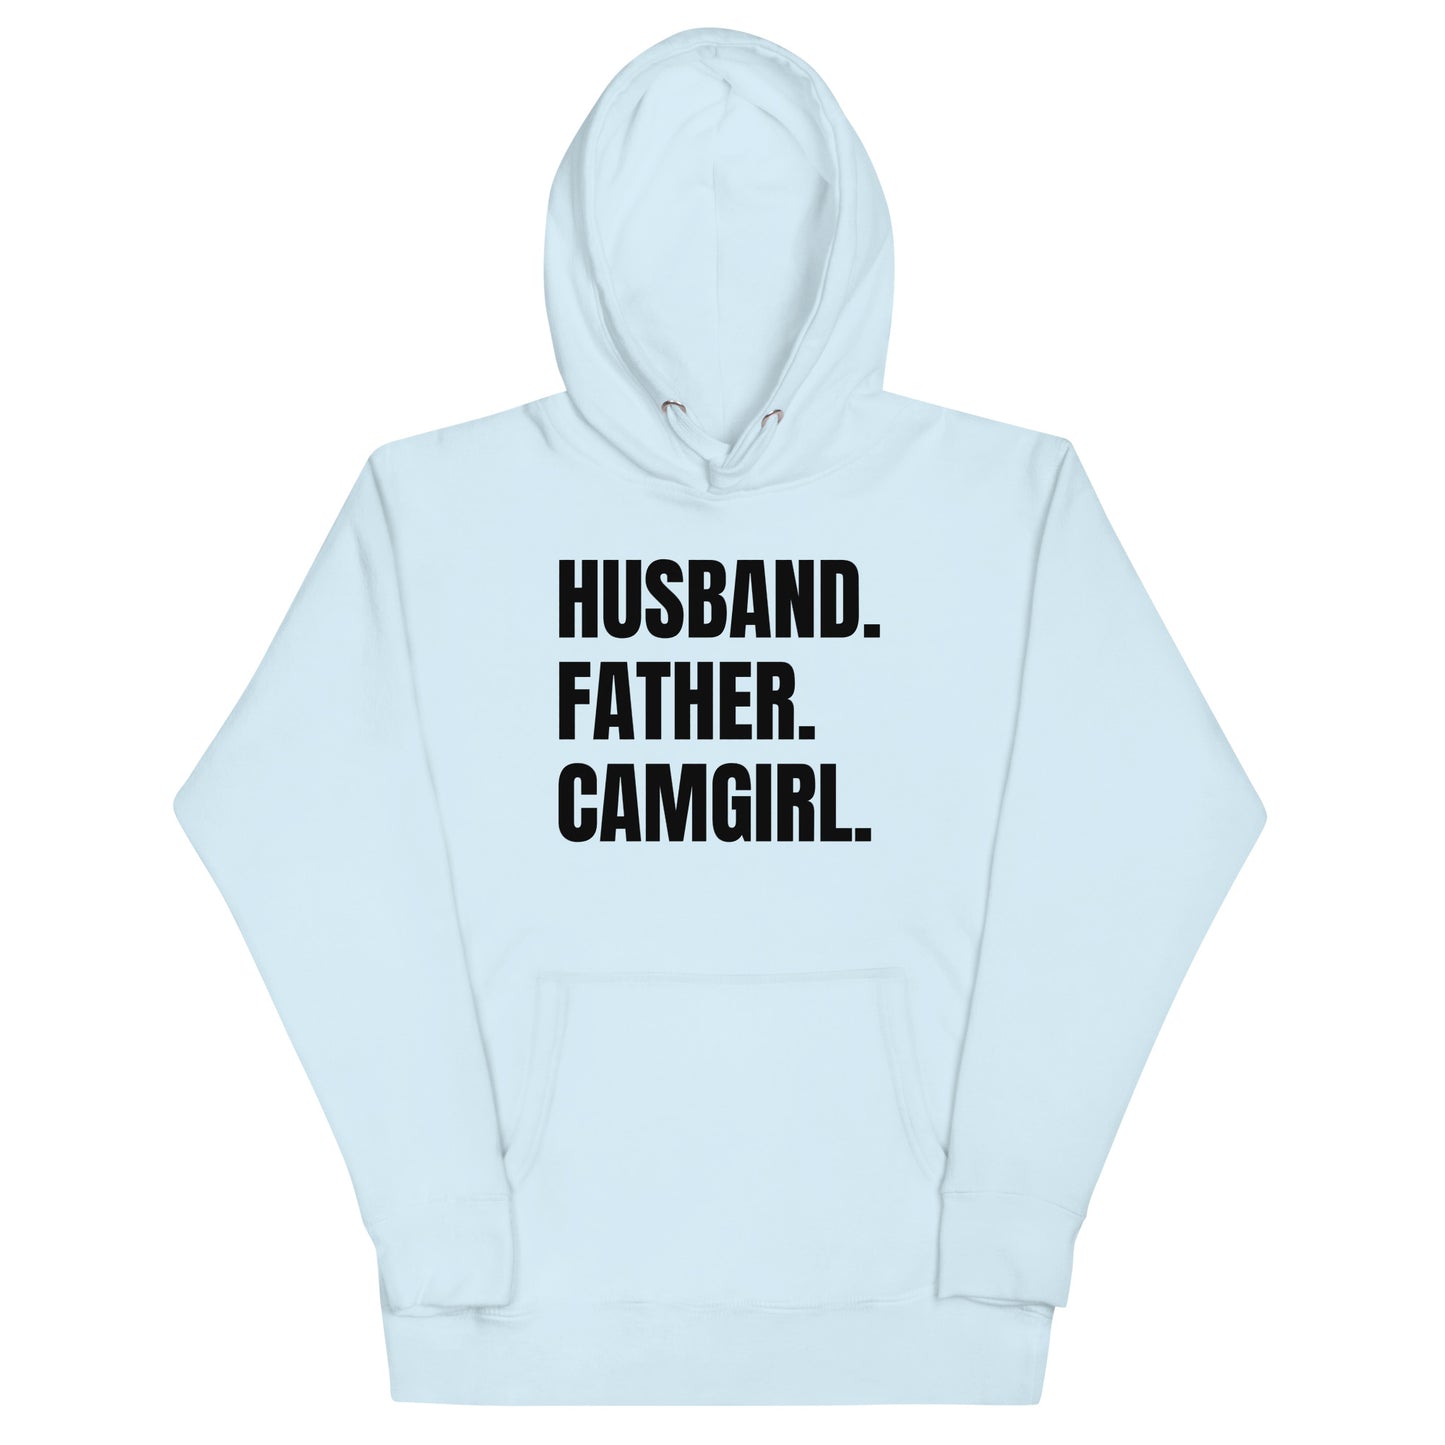 Husband. Father. Camgirl. Unisex Hoodie